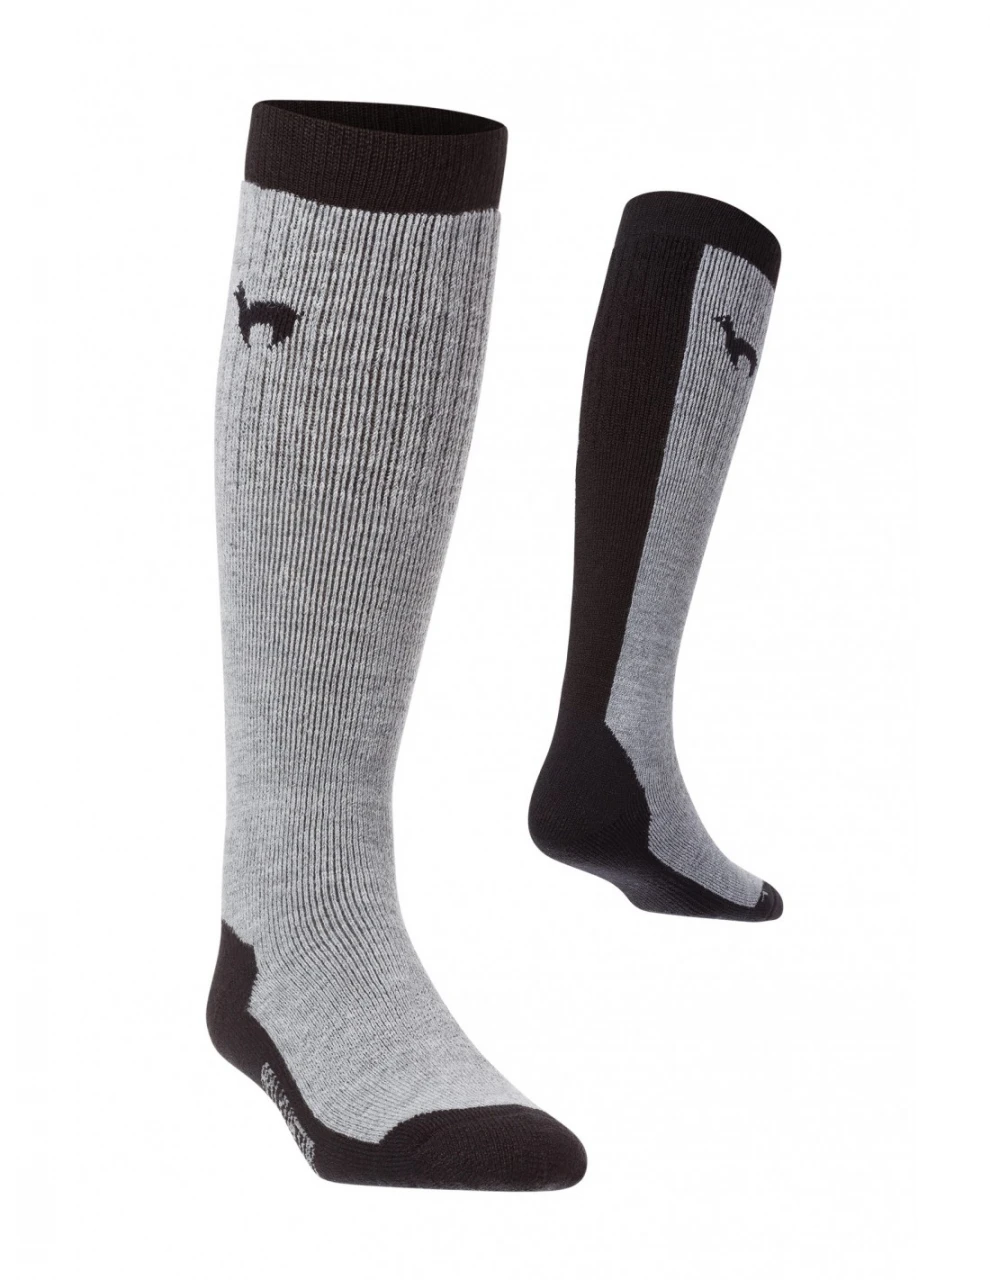 Alpaka Ski socks for women and men in Alpaca and Wool blend